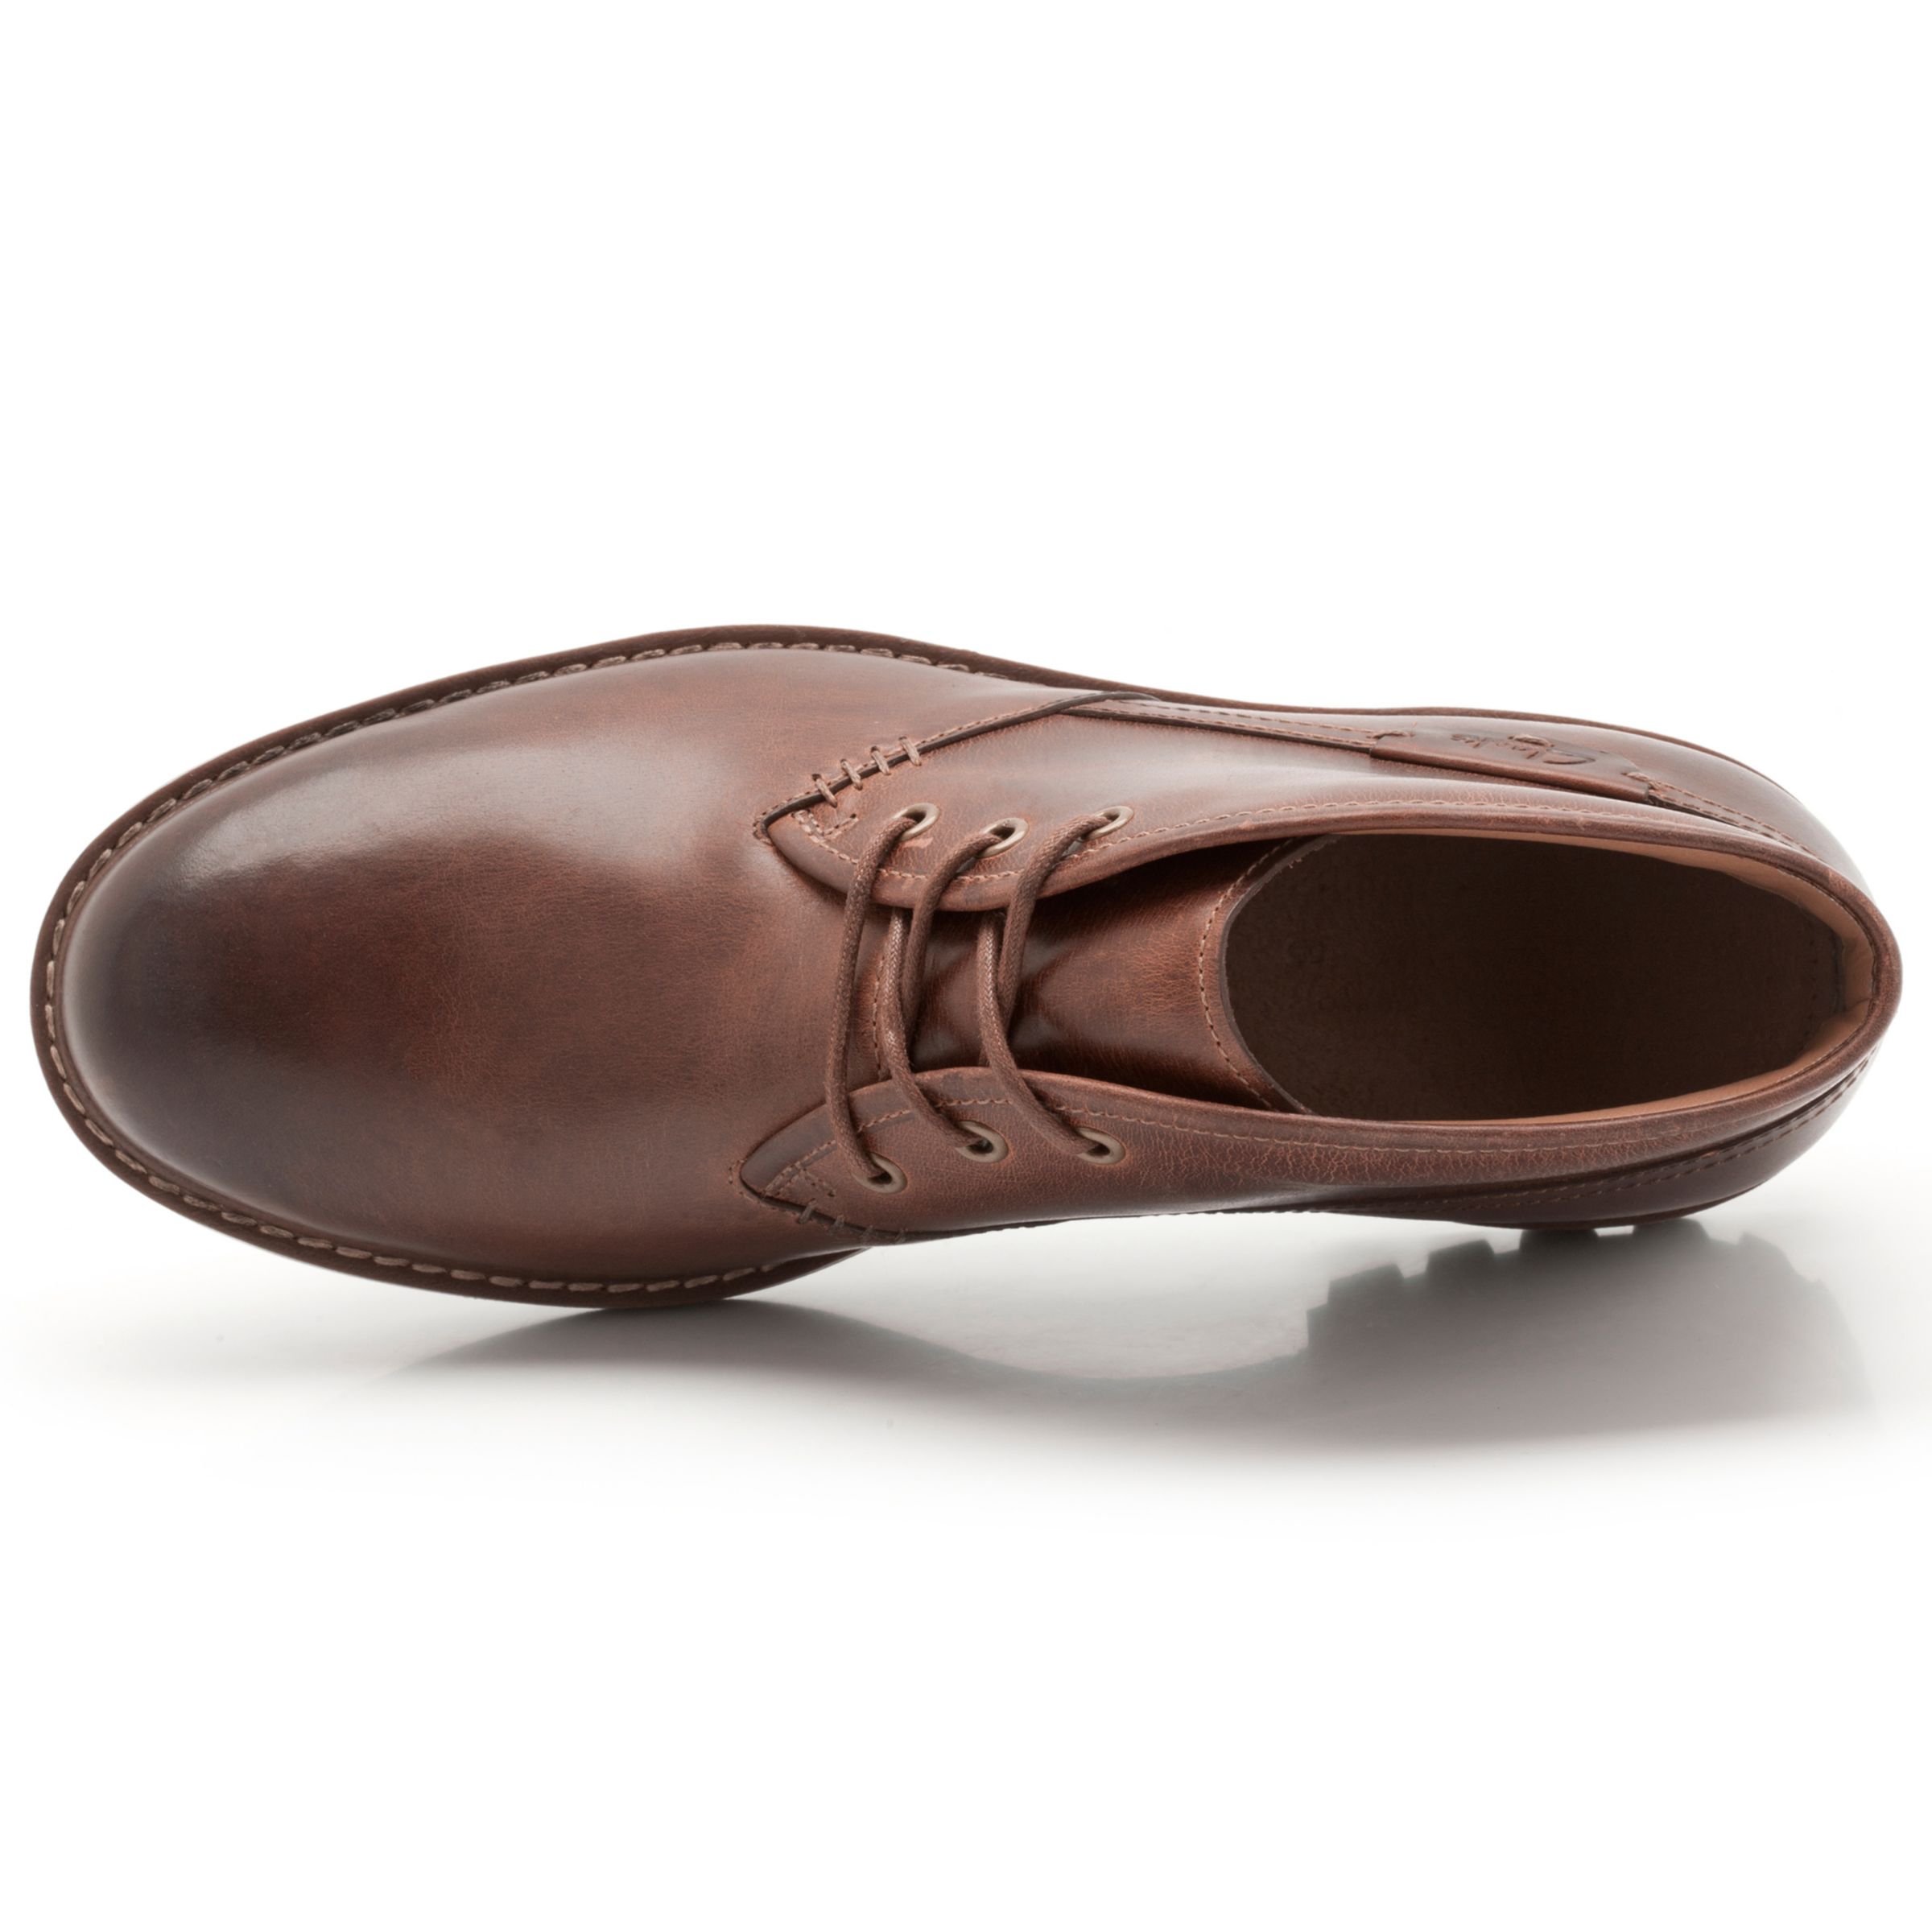 clarks montacute duke leather chukka boots dark brown